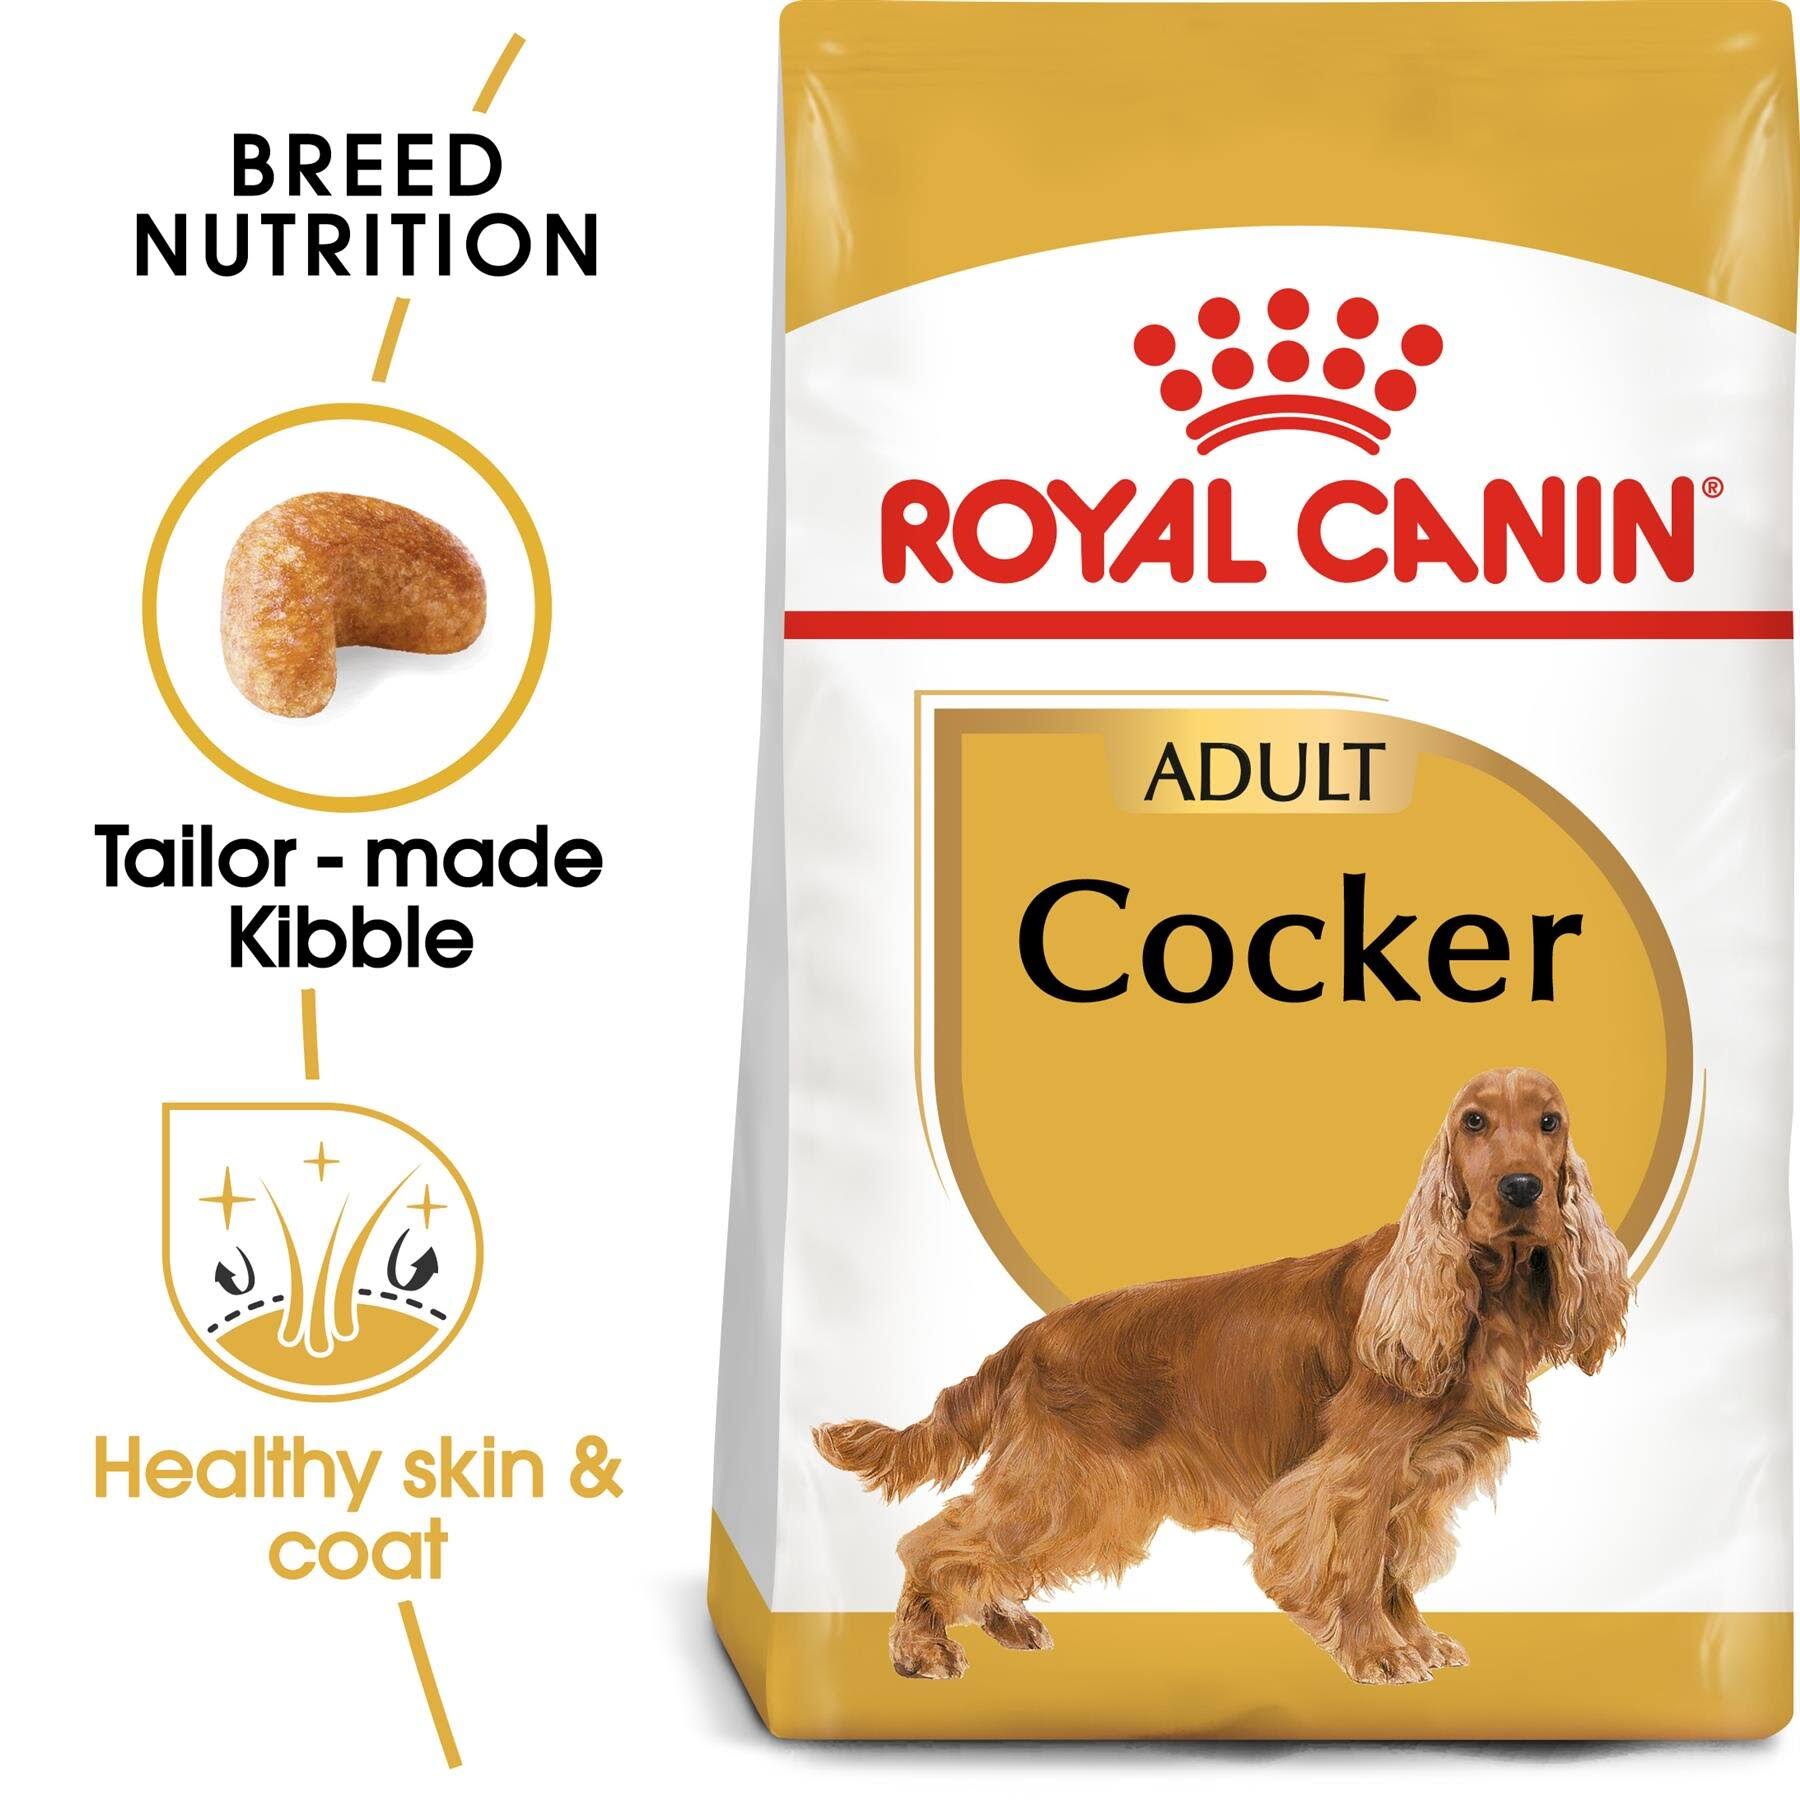 Royal Canin Cocker Adult Dog Food